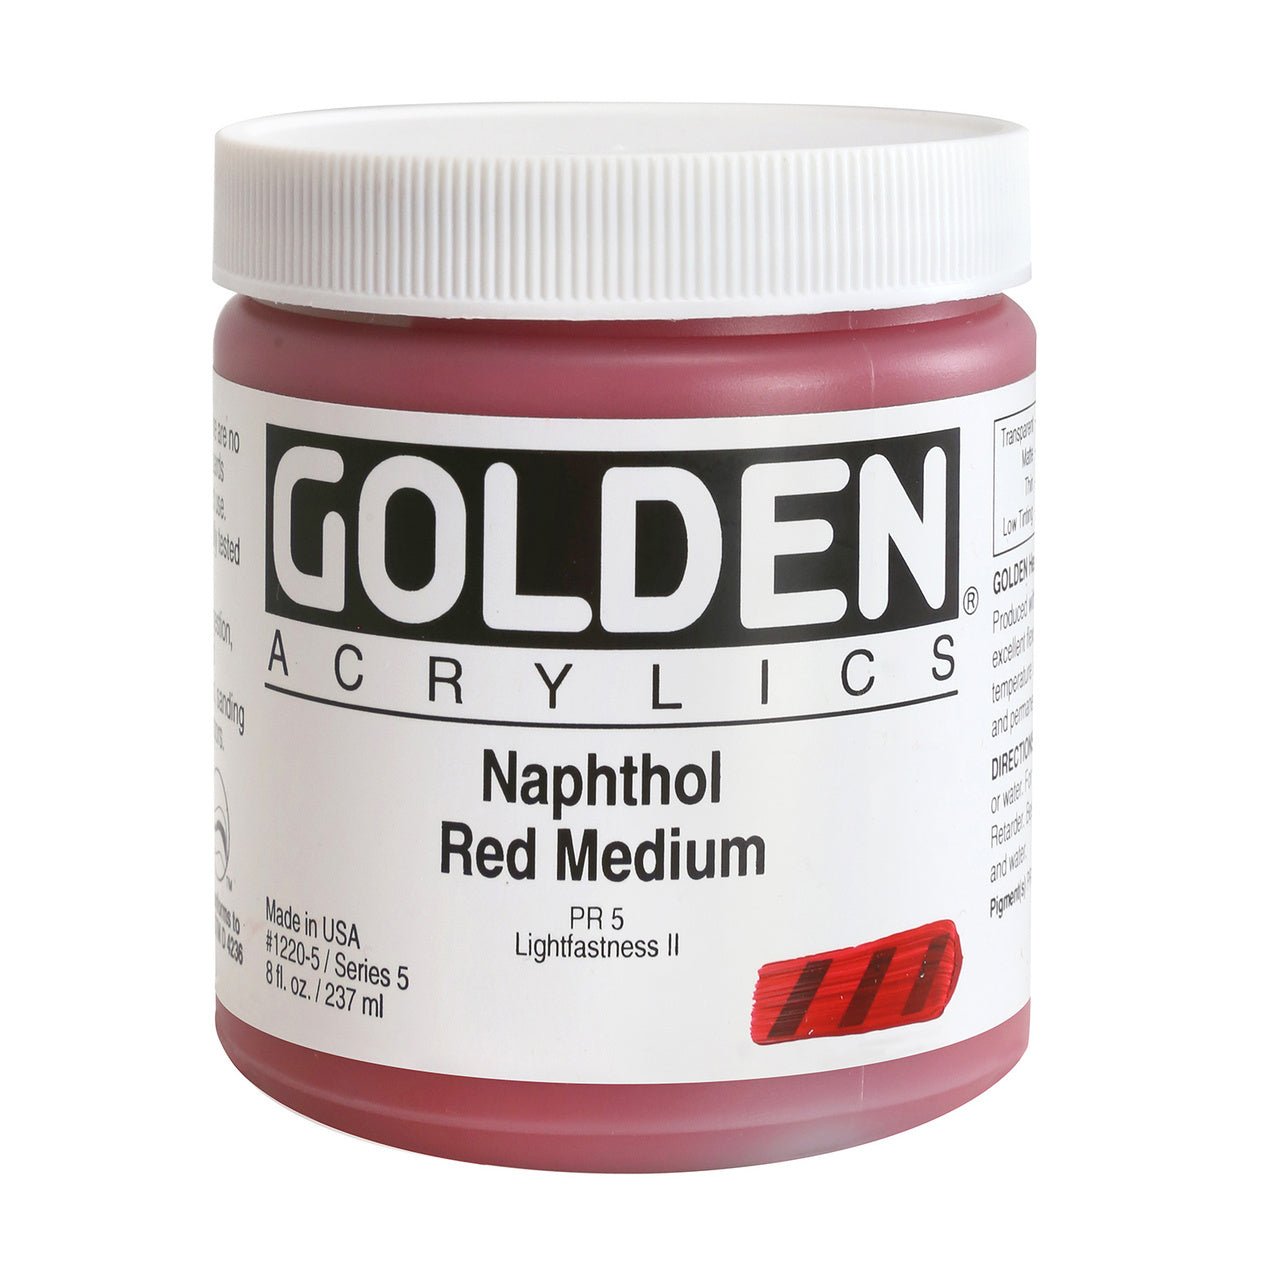 Golden Heavy Body Acrylic Naphthol Red Medium 8 oz - merriartist.com